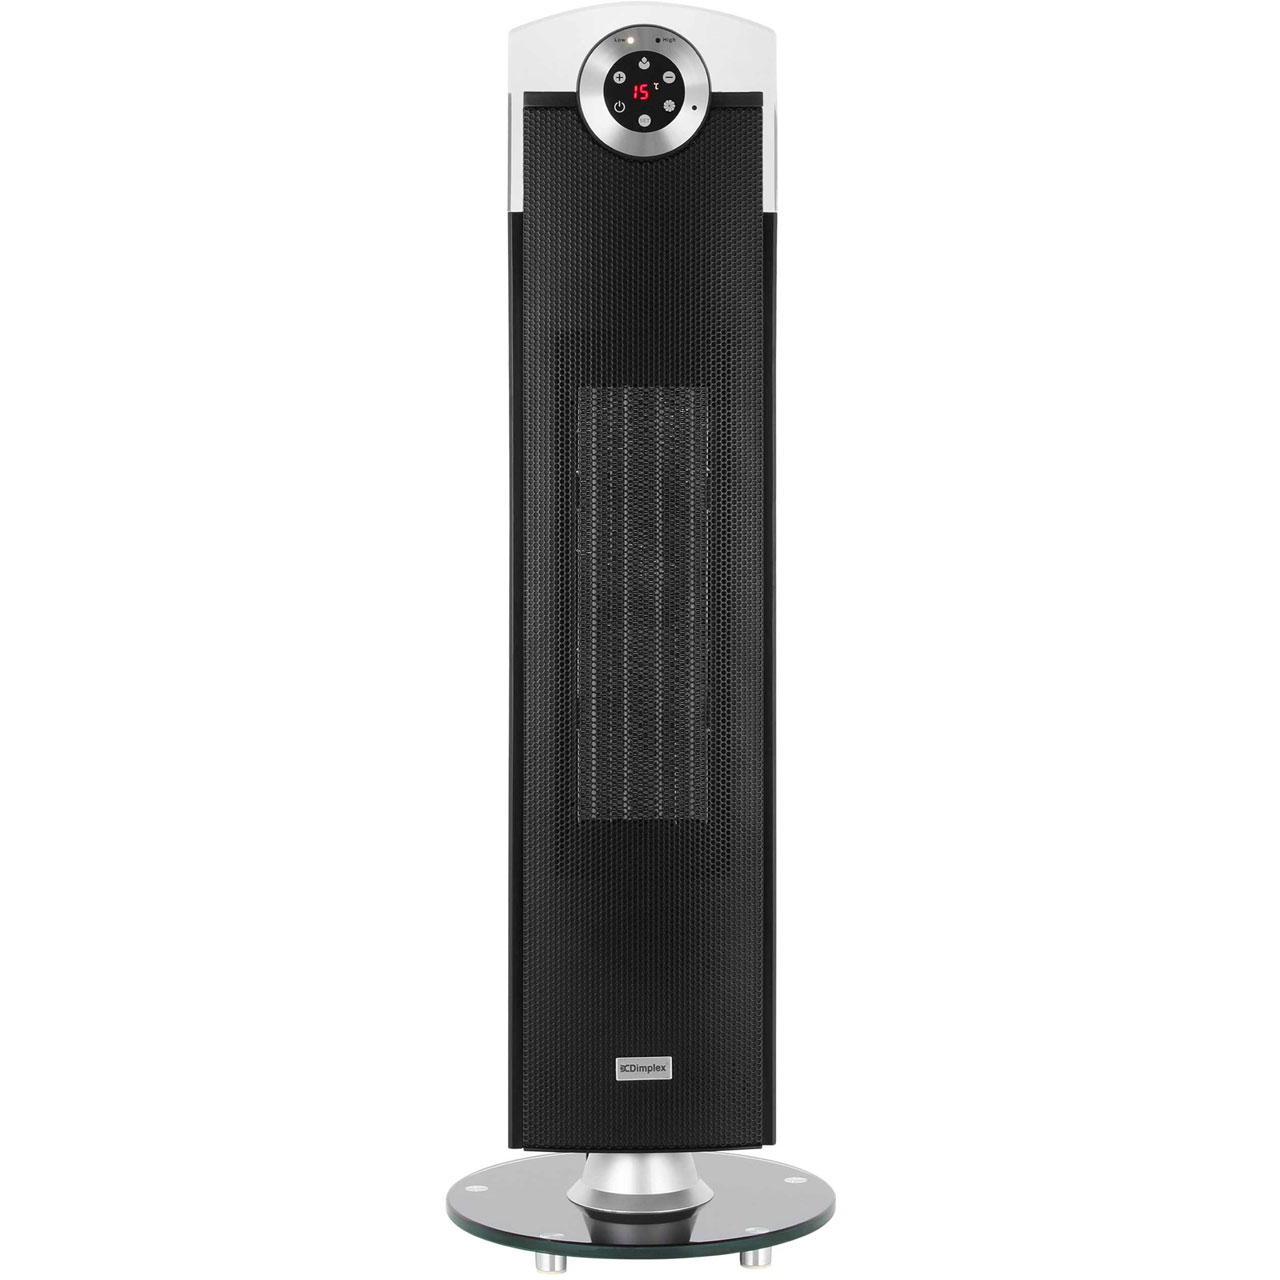 Dimplex Studio G Dxstg25 Ceramic Fan Heater With Remote Control 2500w Black with regard to dimensions 1280 X 1280